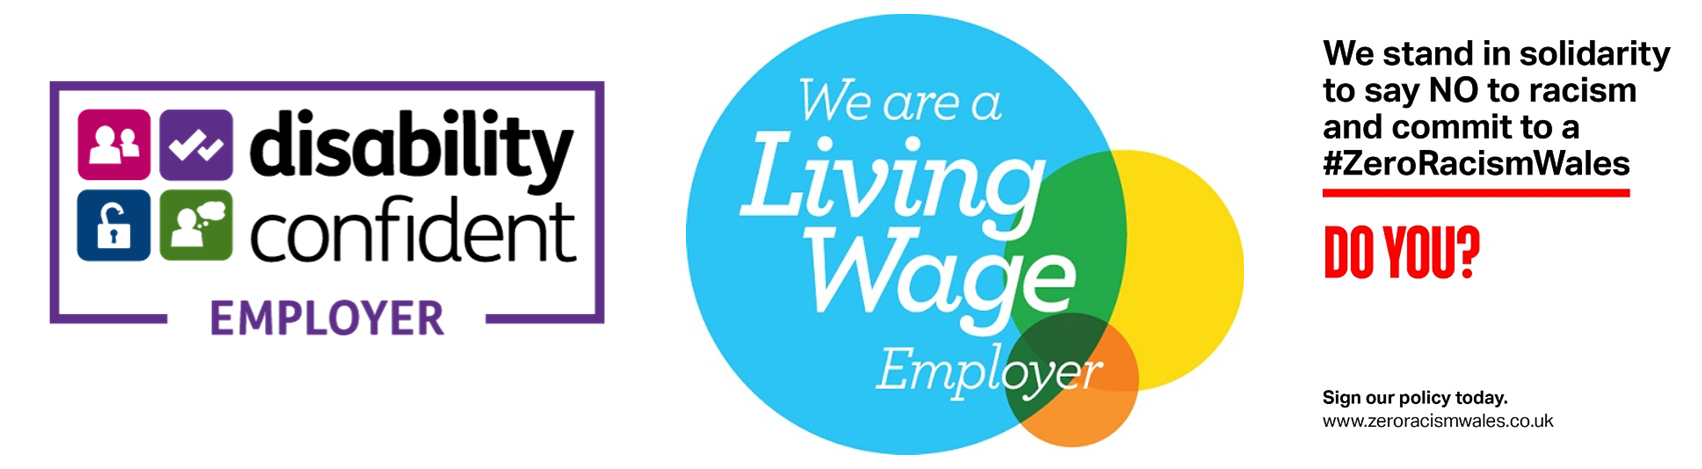 disability confident employer logo, living wage employer logo, anti-racist logo